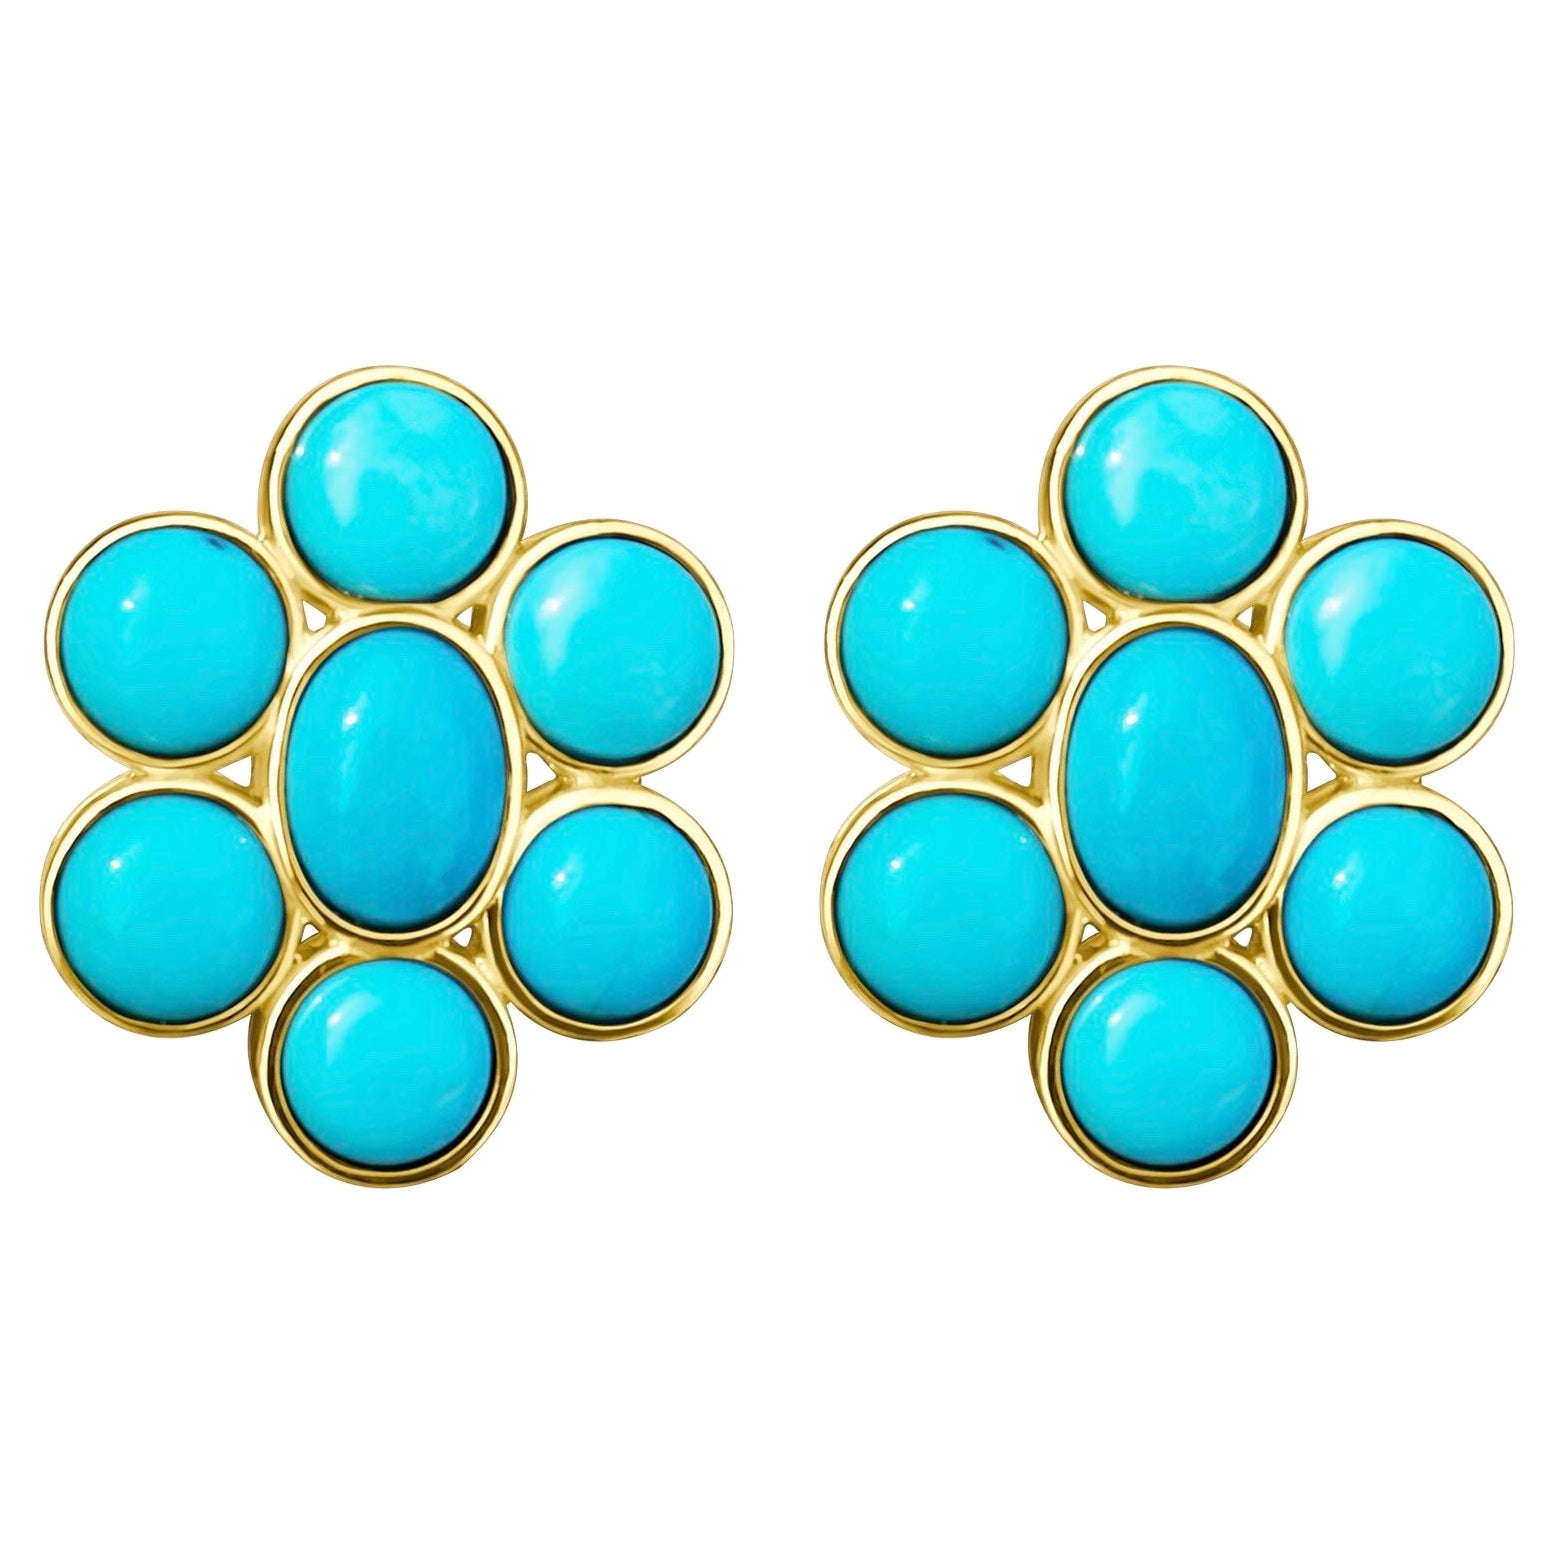 Nina Zhou 8ct Blue Turquoise Gemstone Cluster Earrings in 18k Yellow Gold